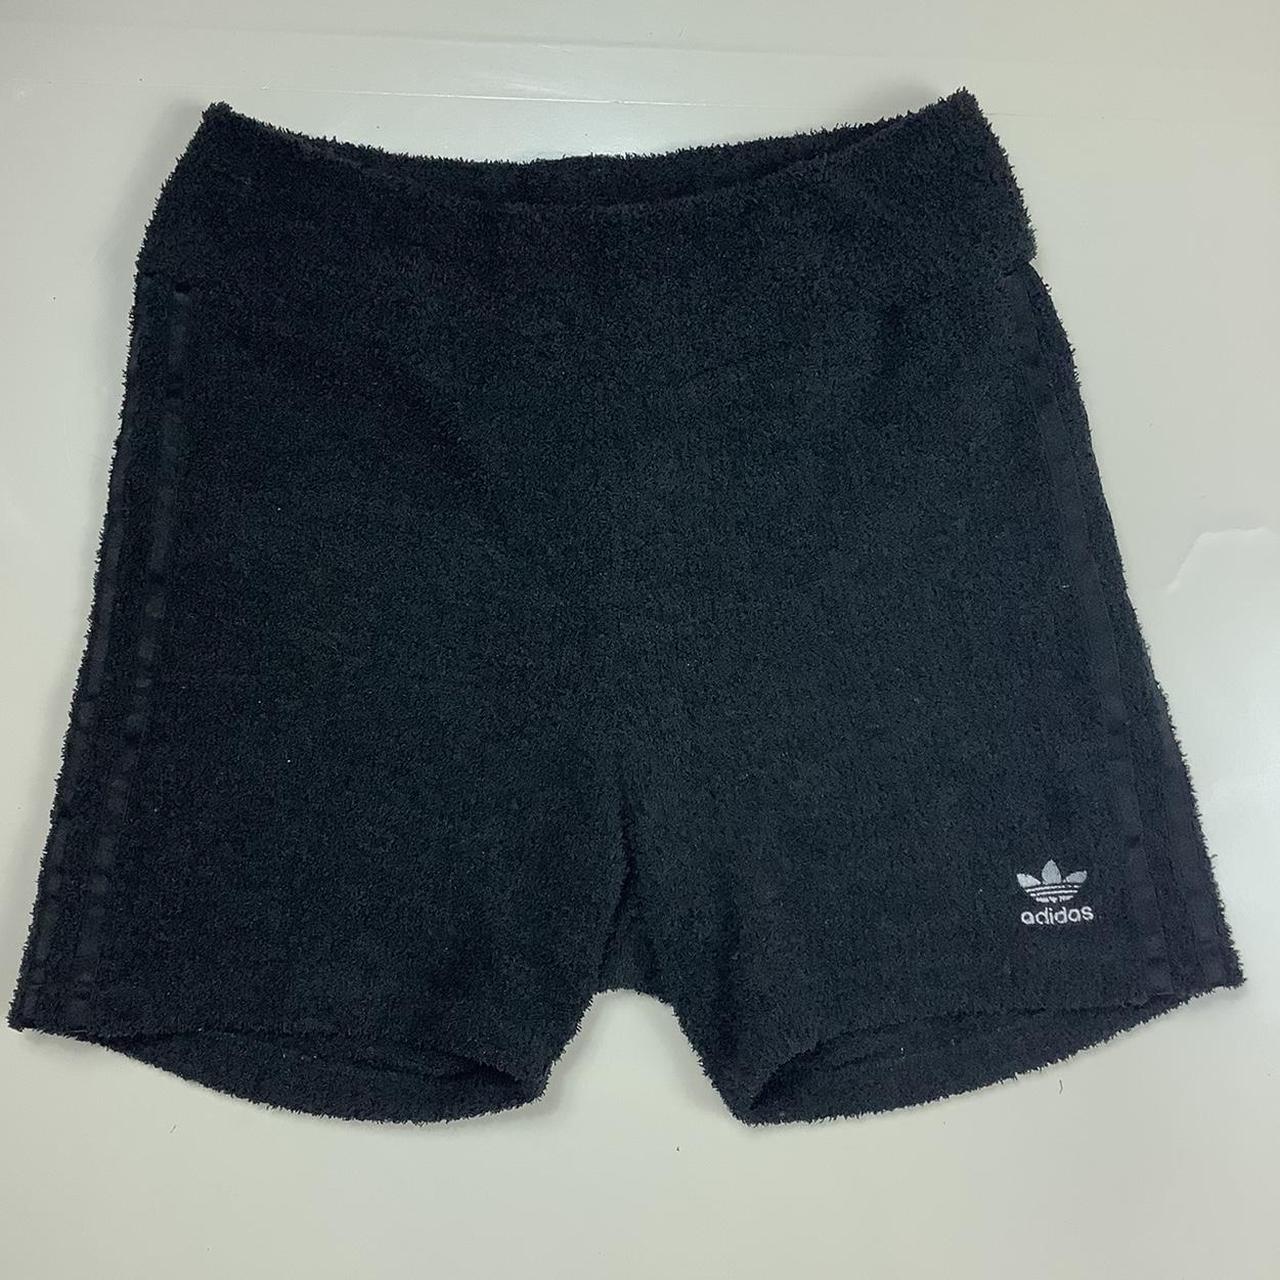 Adidas Originals fluffy black cycling shorts Size... - Depop